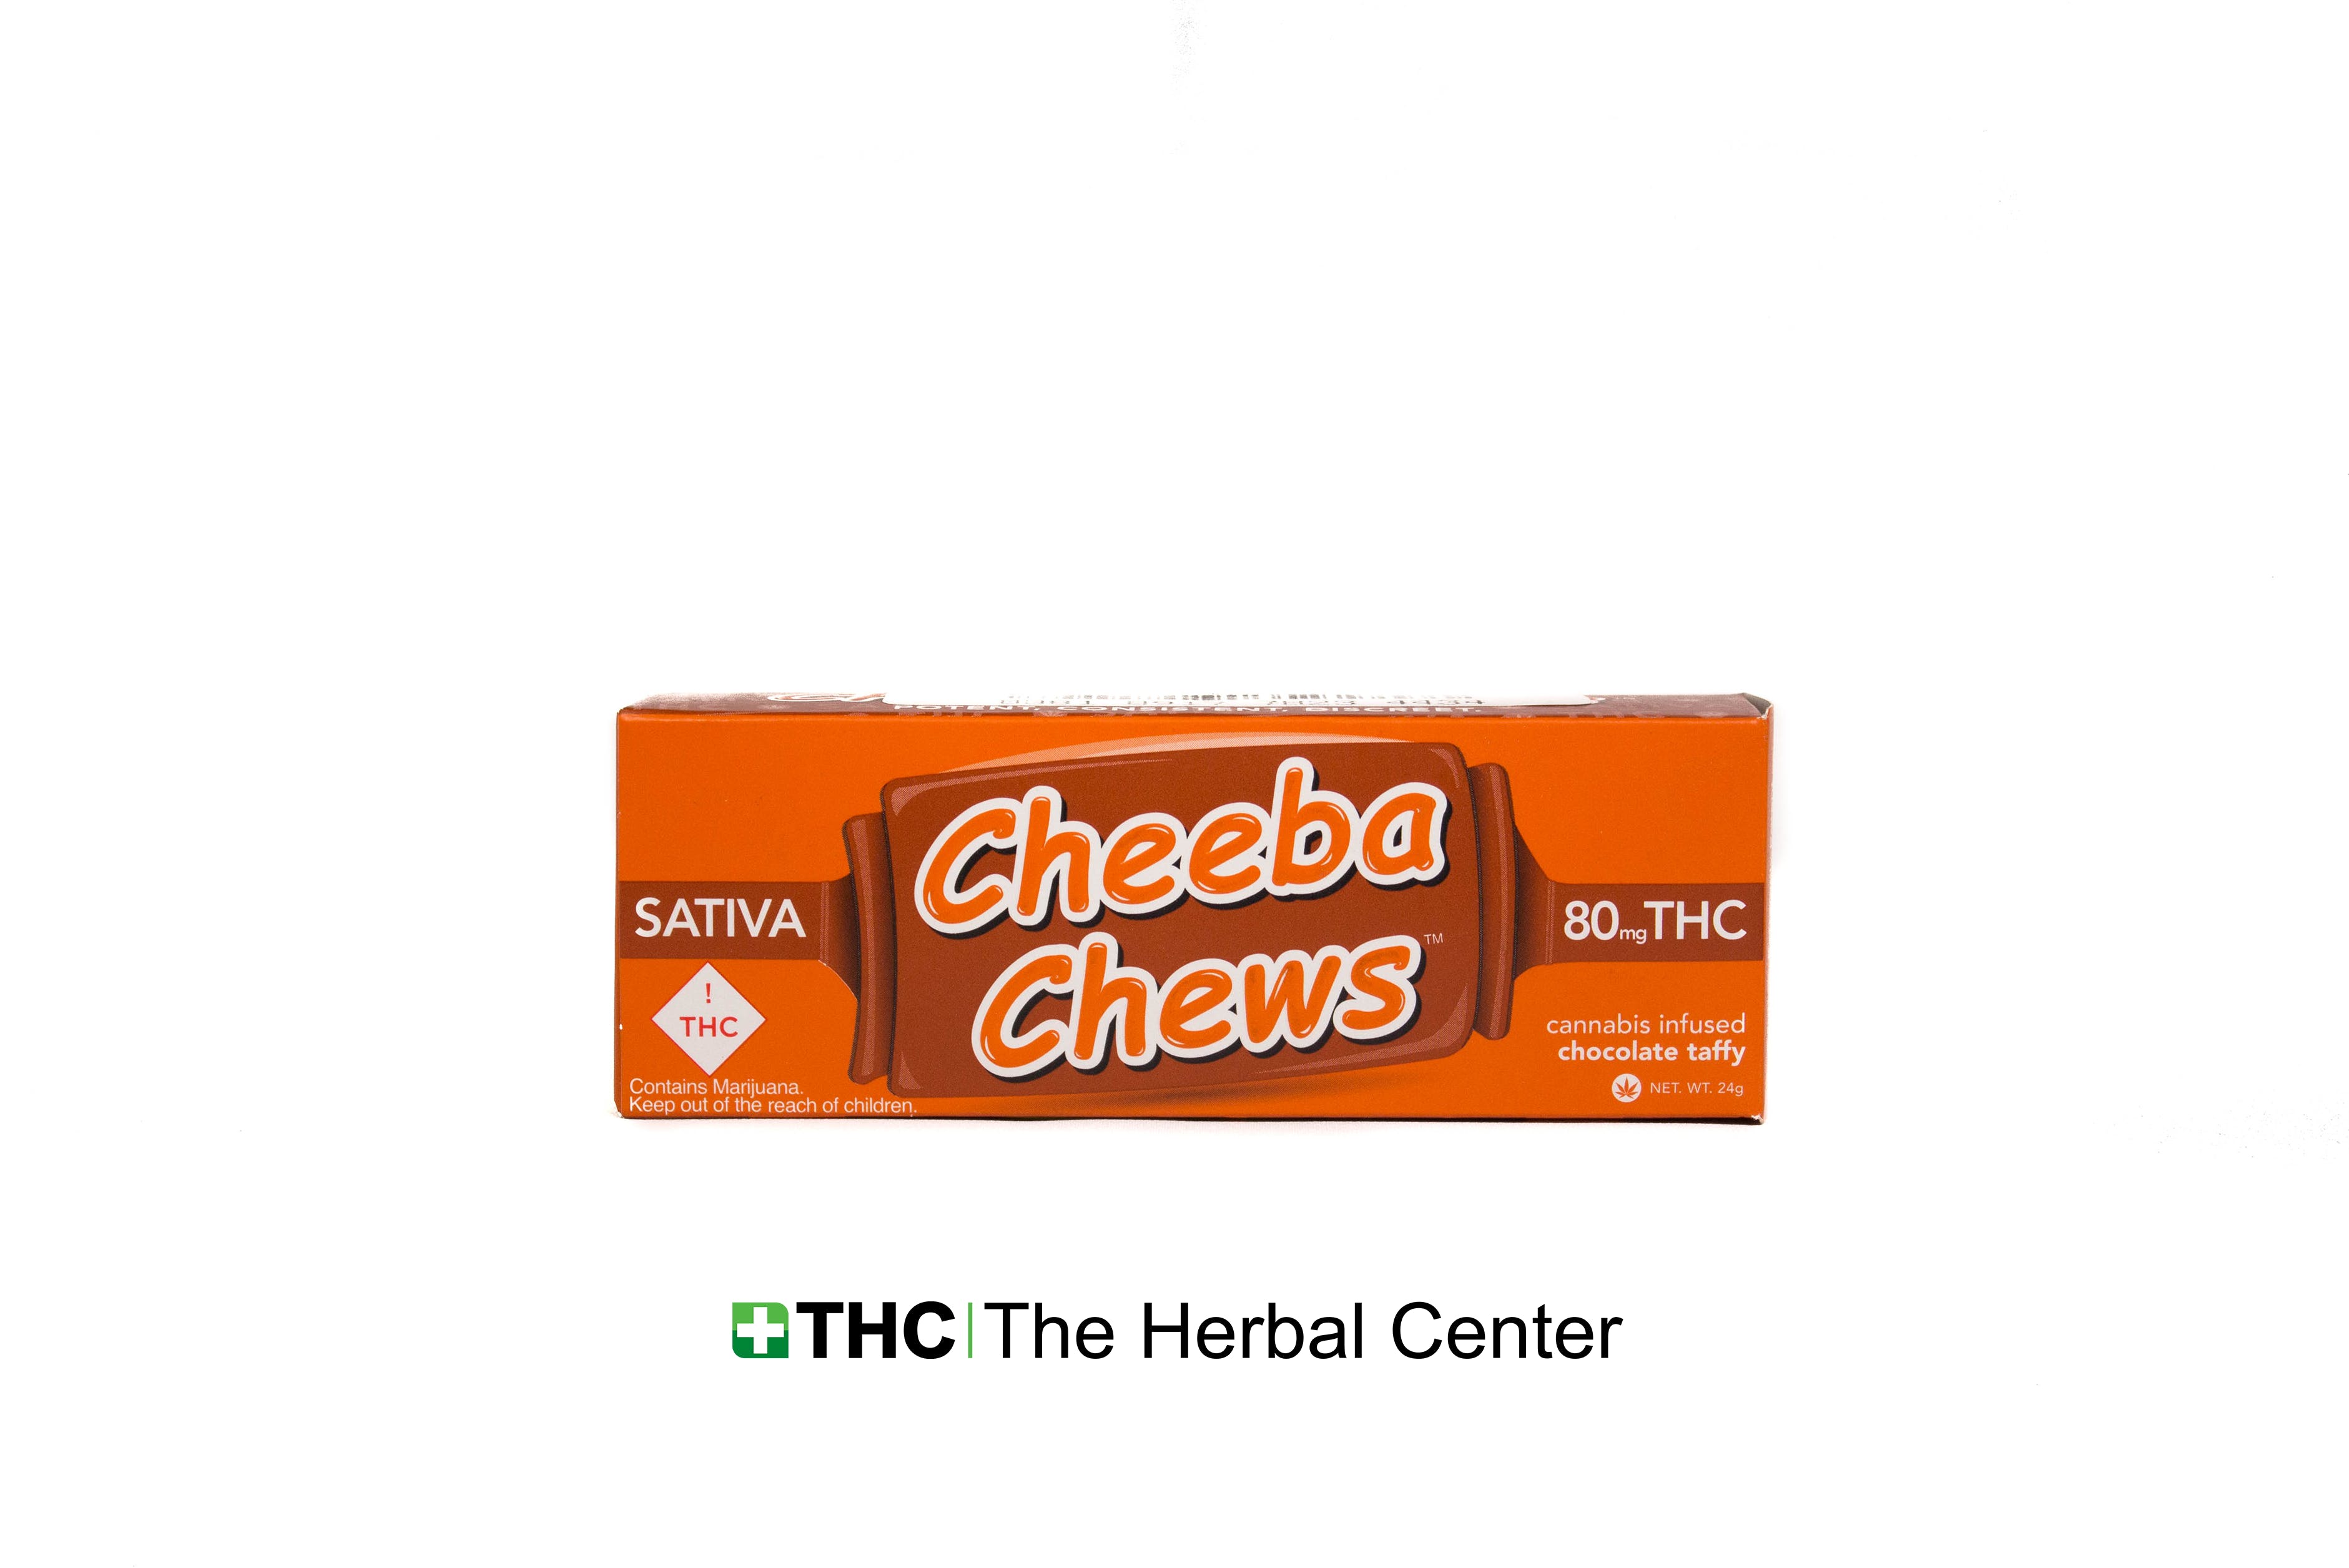 marijuana-dispensaries-the-herbal-center-broadway-rec-in-denver-cheeba-chew-sativa-80mg